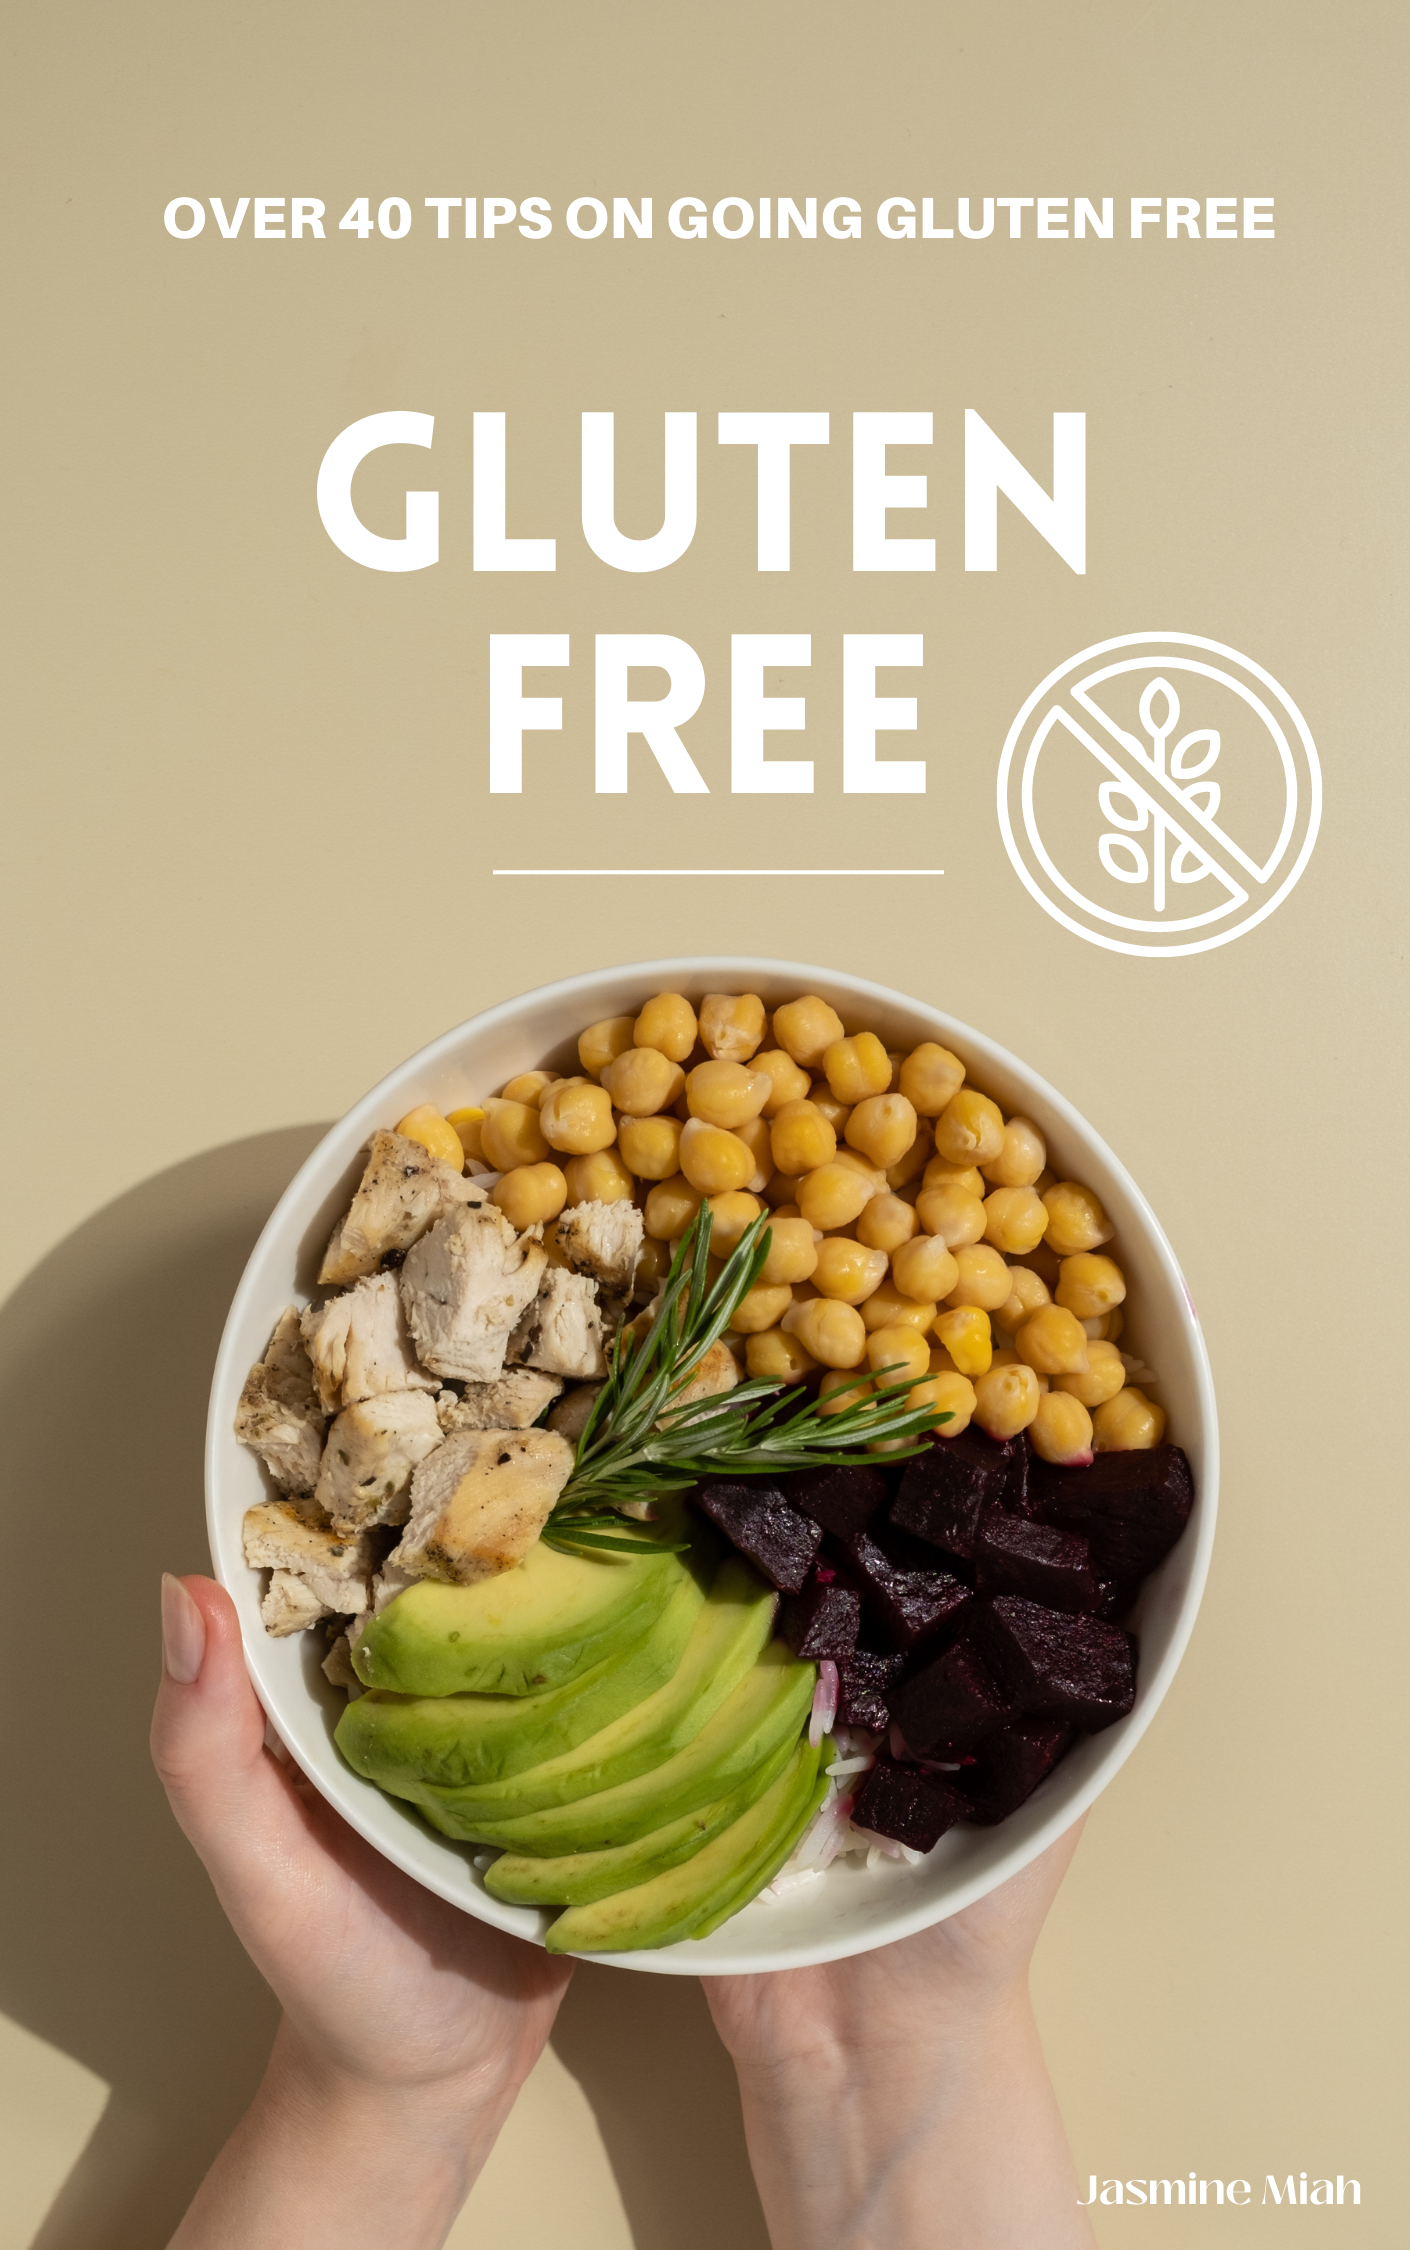 Gluten Free - Over 40 tips on Going Gluten Free